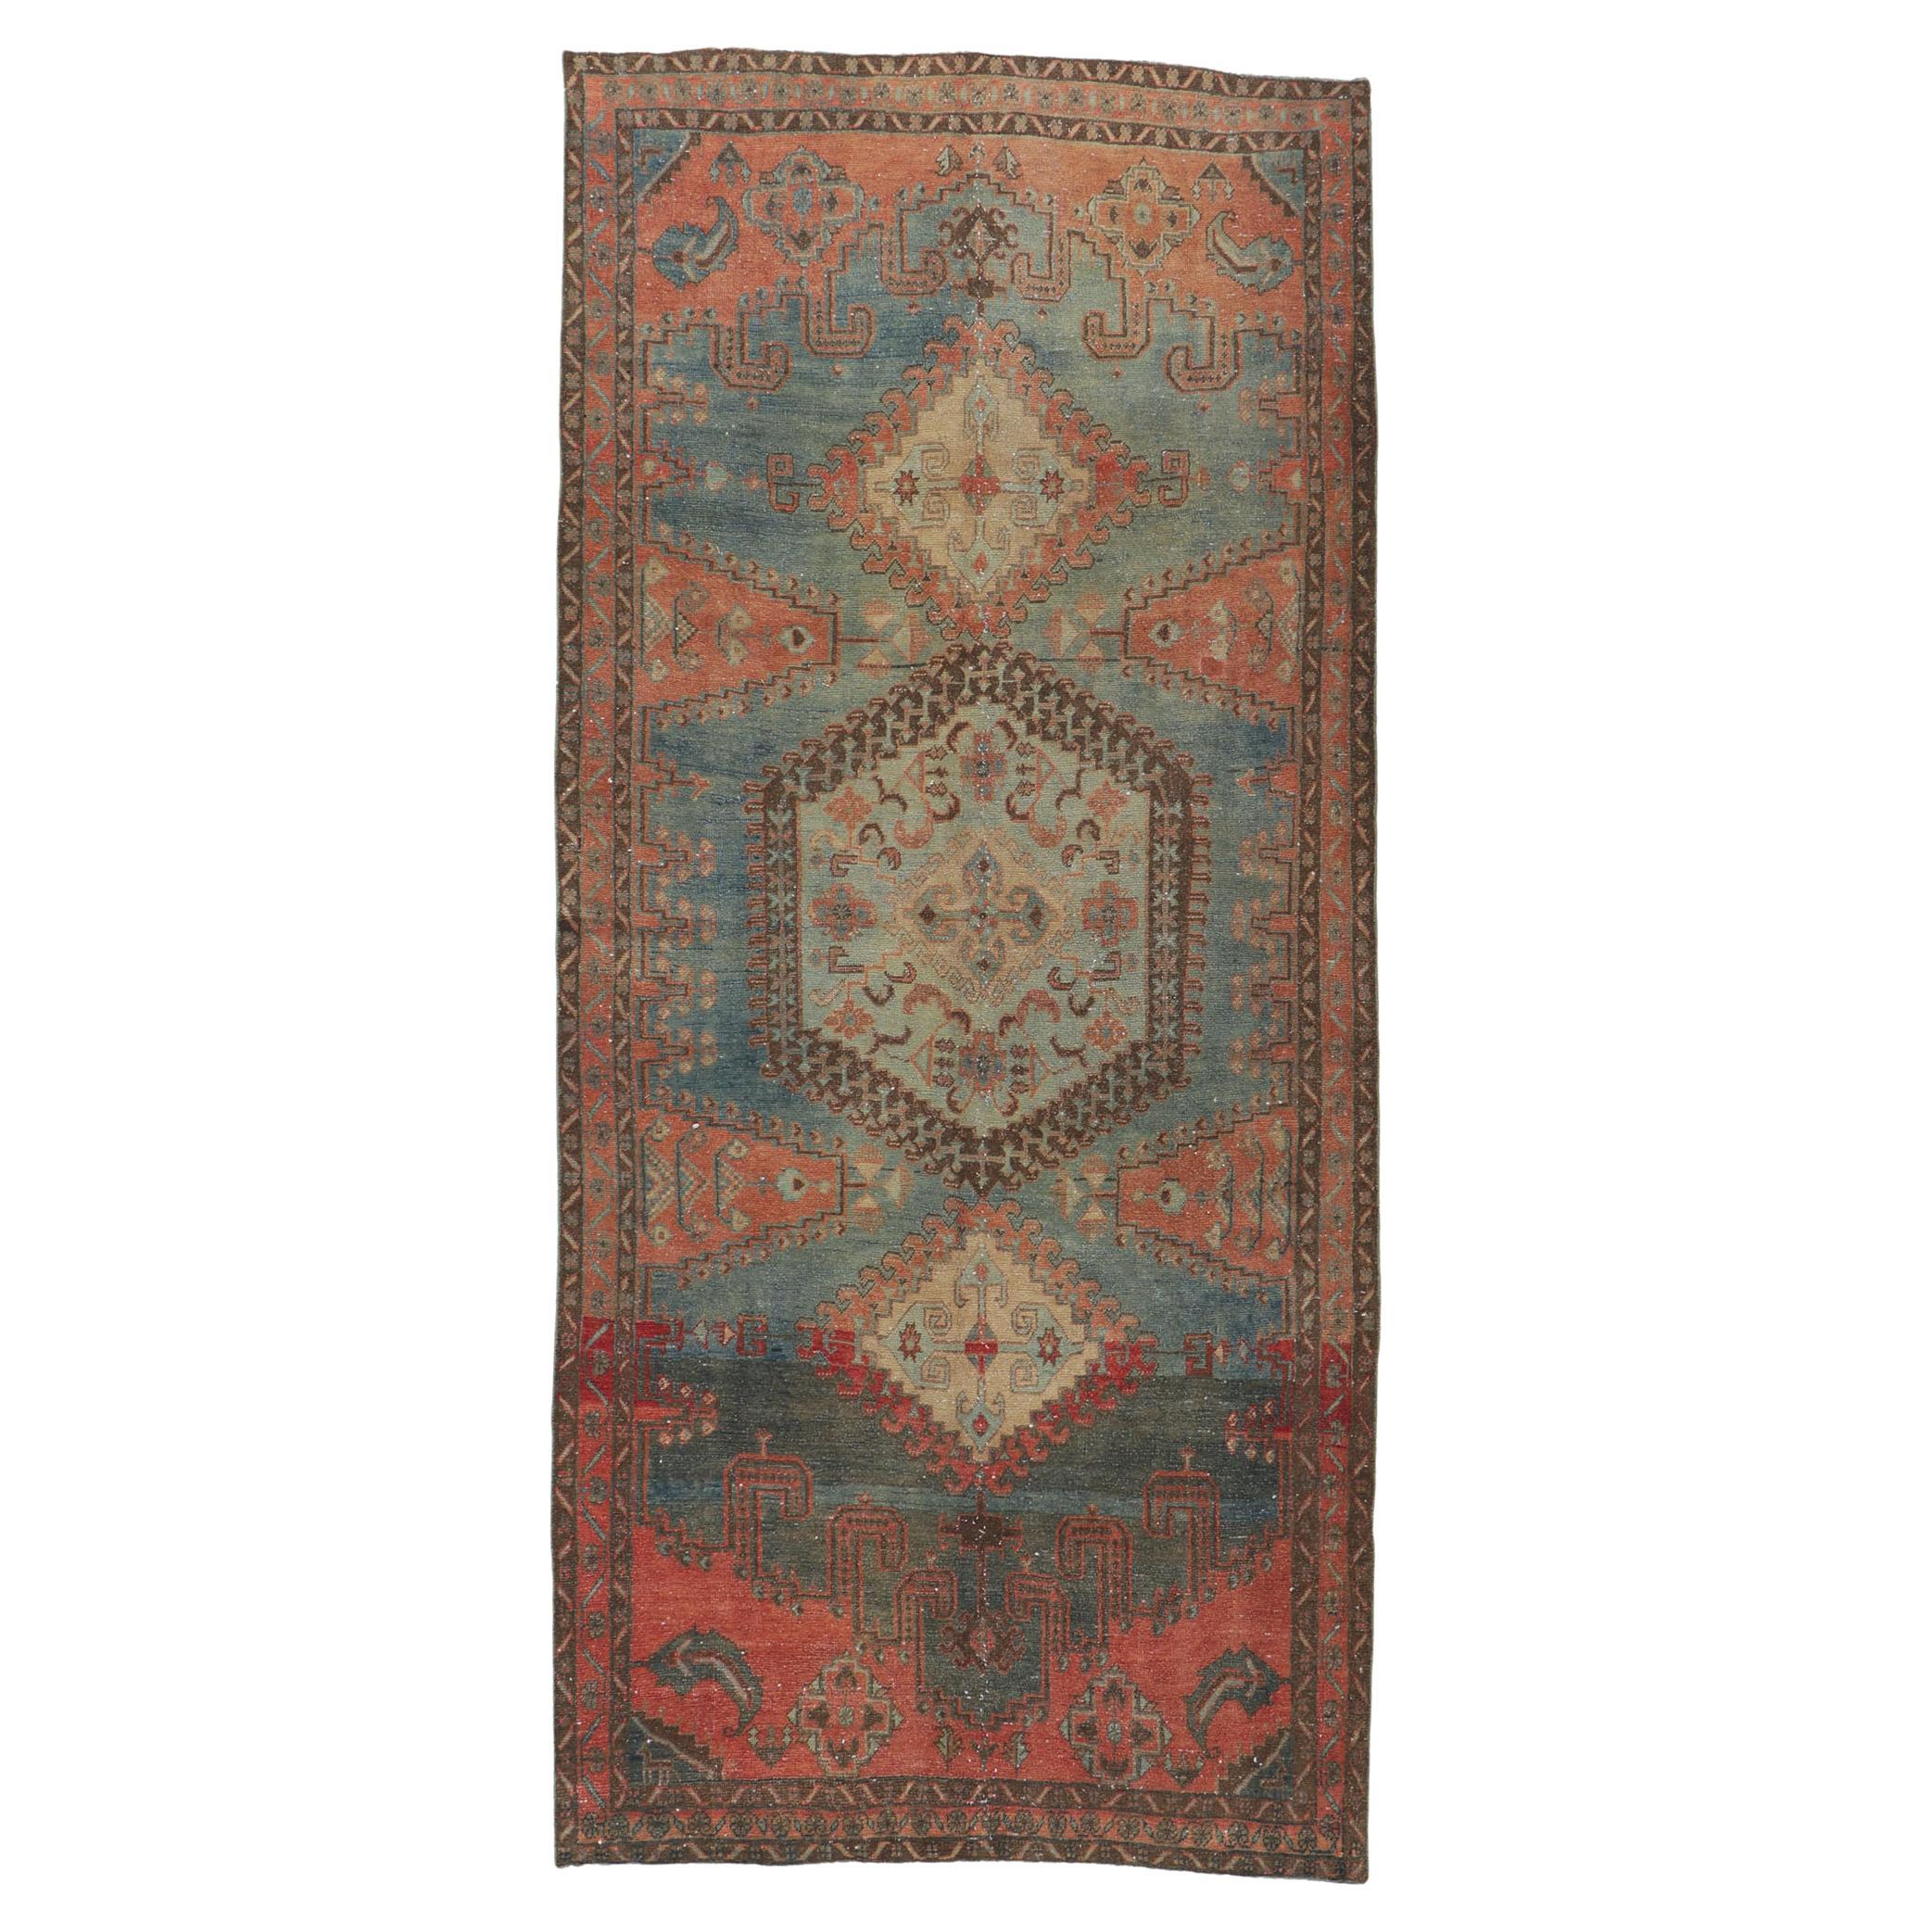 Persischer Viss-Teppich im Vintage-Stil im Used-Look, rustikale Finesse trifft Stammeskunst-Enchantment